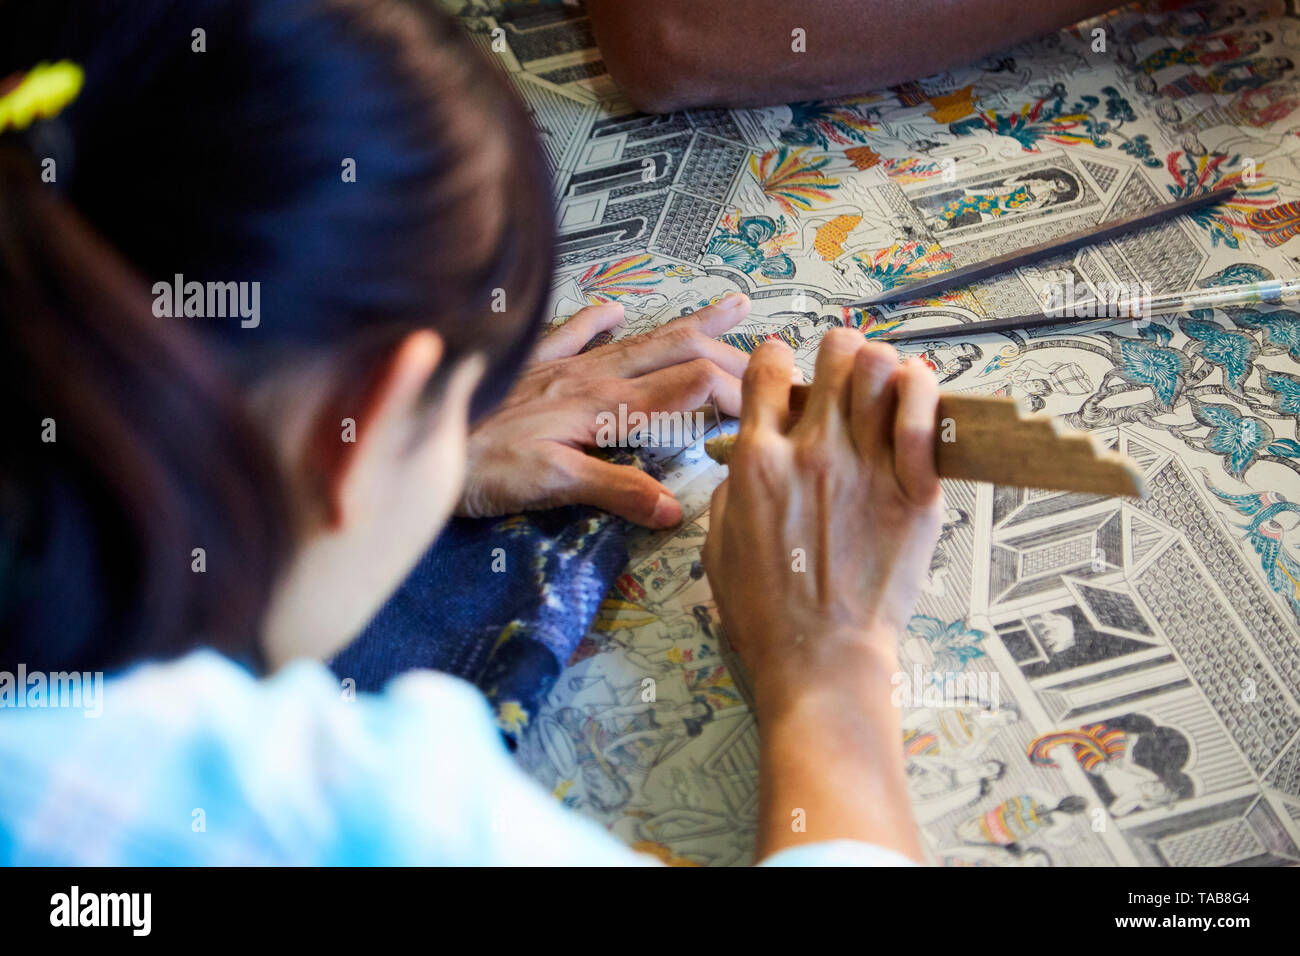 Woman working etching designs into enamelware in marketplace in Bagan, Myanmar. Stock Photo